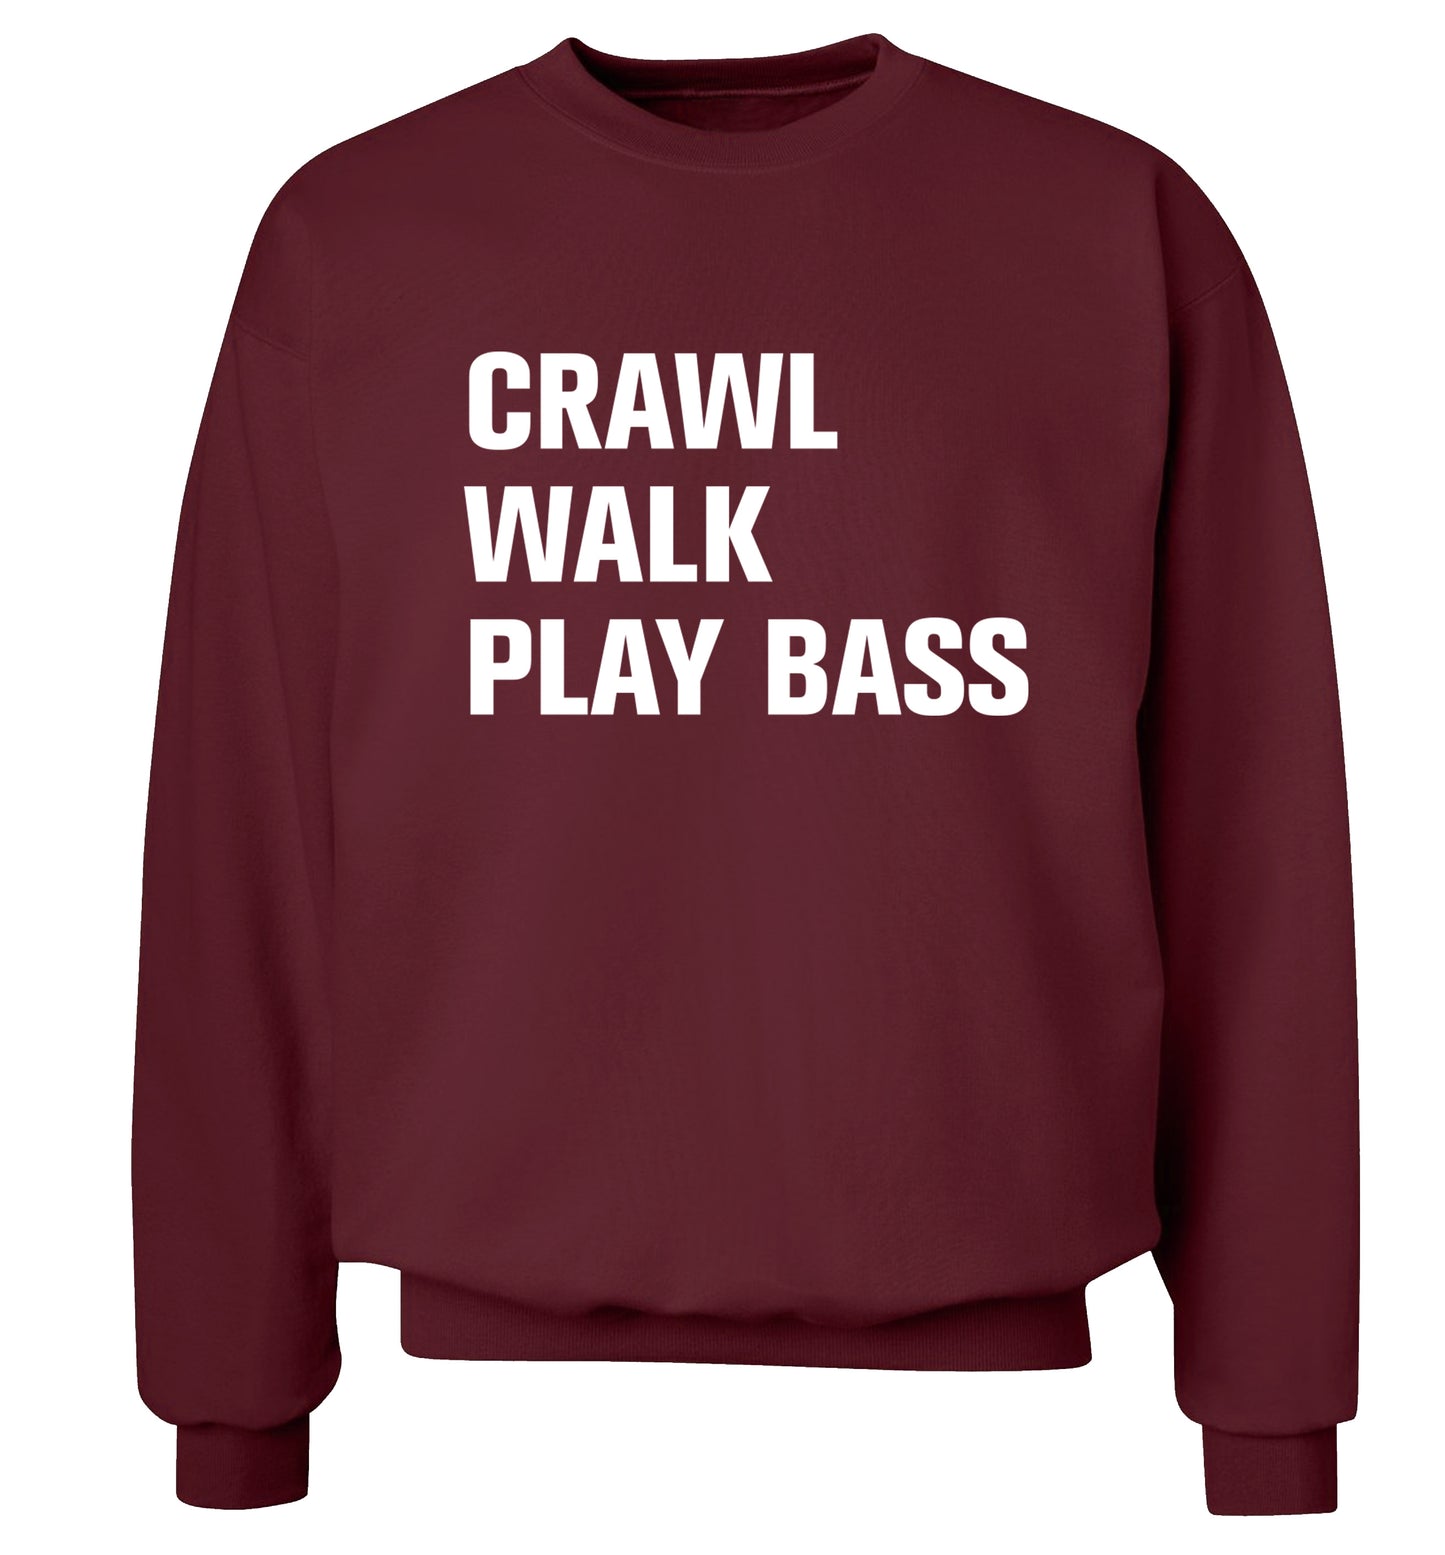 Crawl Walk Play Bass Adult's unisex maroon Sweater 2XL